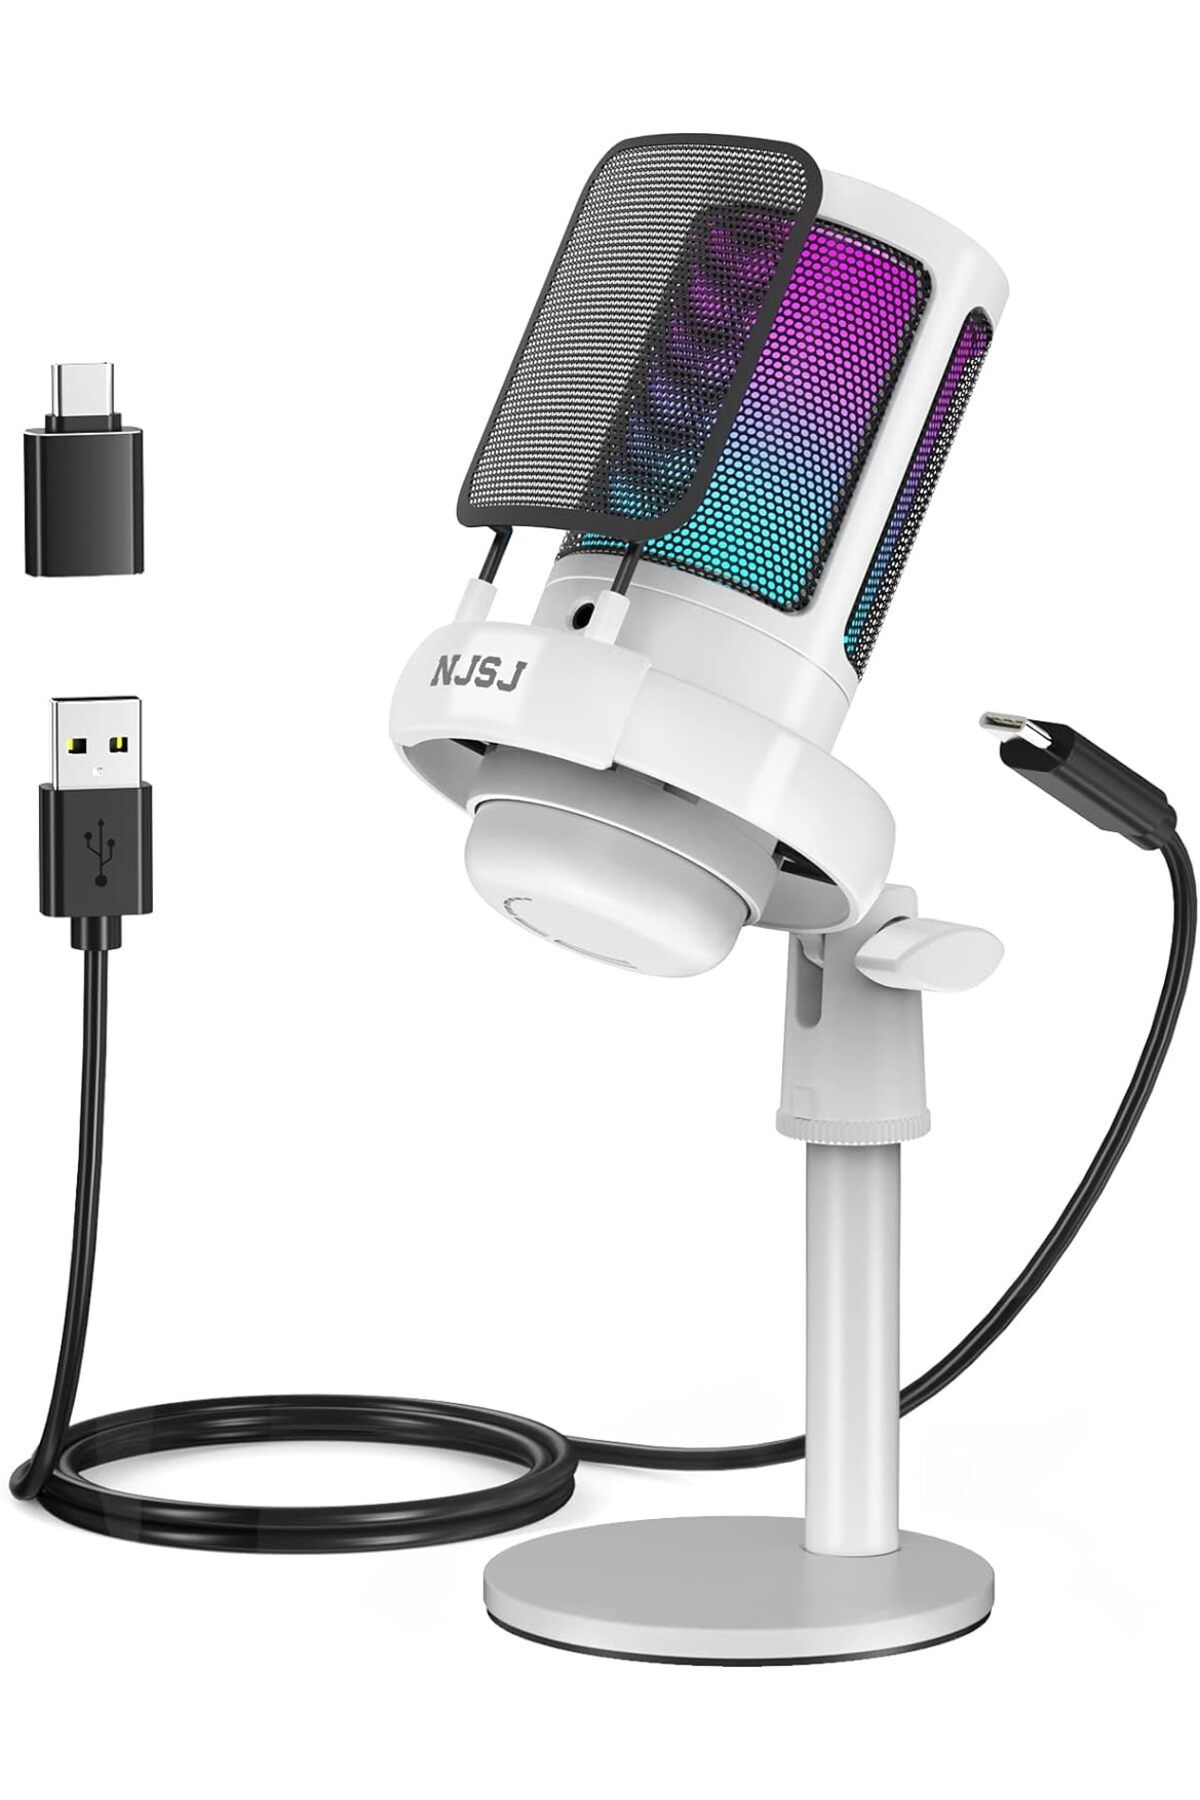 NJSJ USB Oyun Mikrofonu, Dokunmatik Sessize Alma, RGB Aydınlatmalı Mikrofon